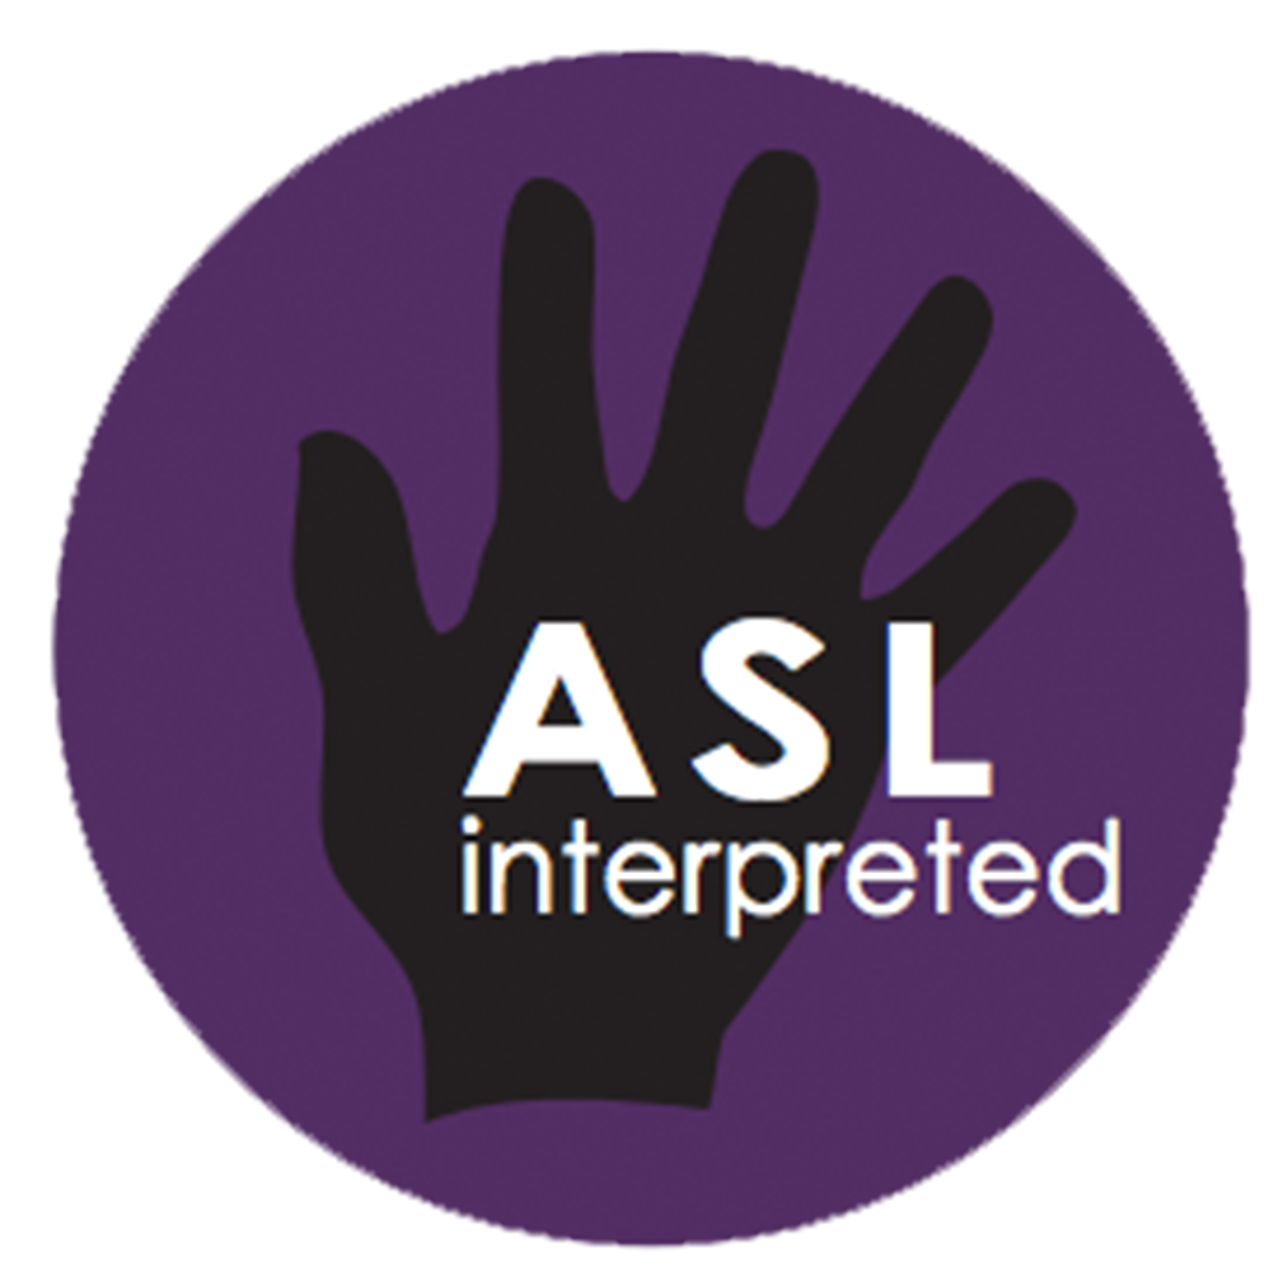 ASL-interpreted event